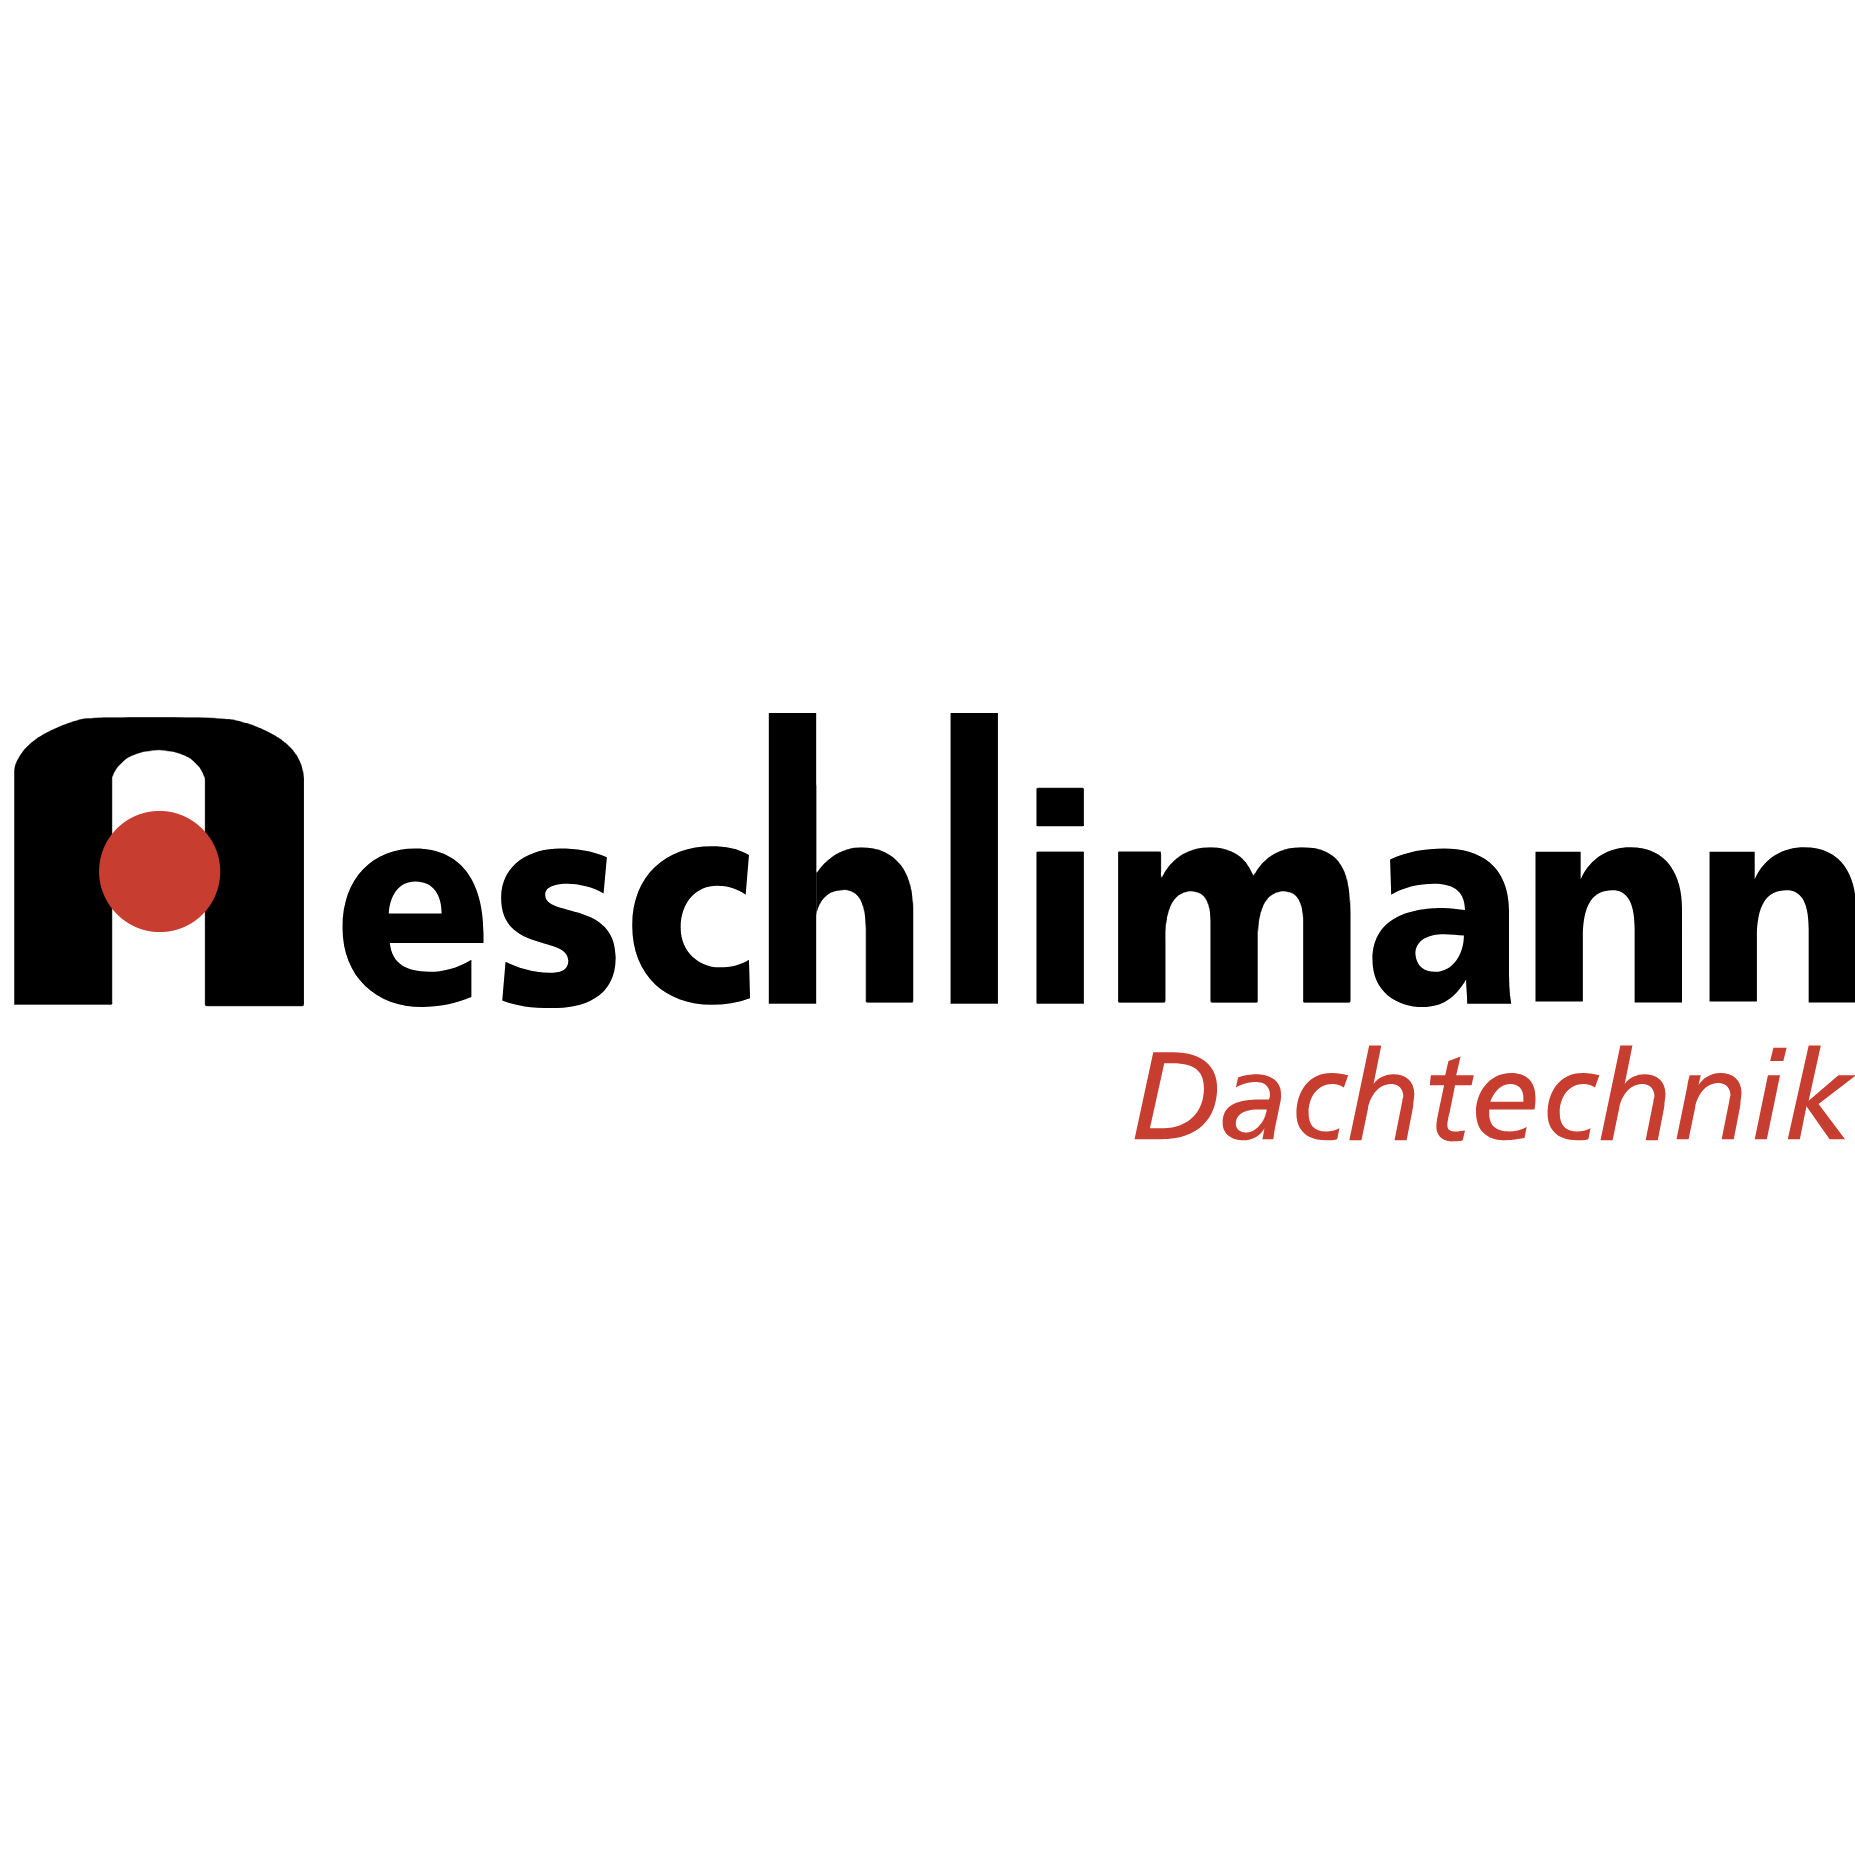 Aeschlimann Dachtechnik AG Logo